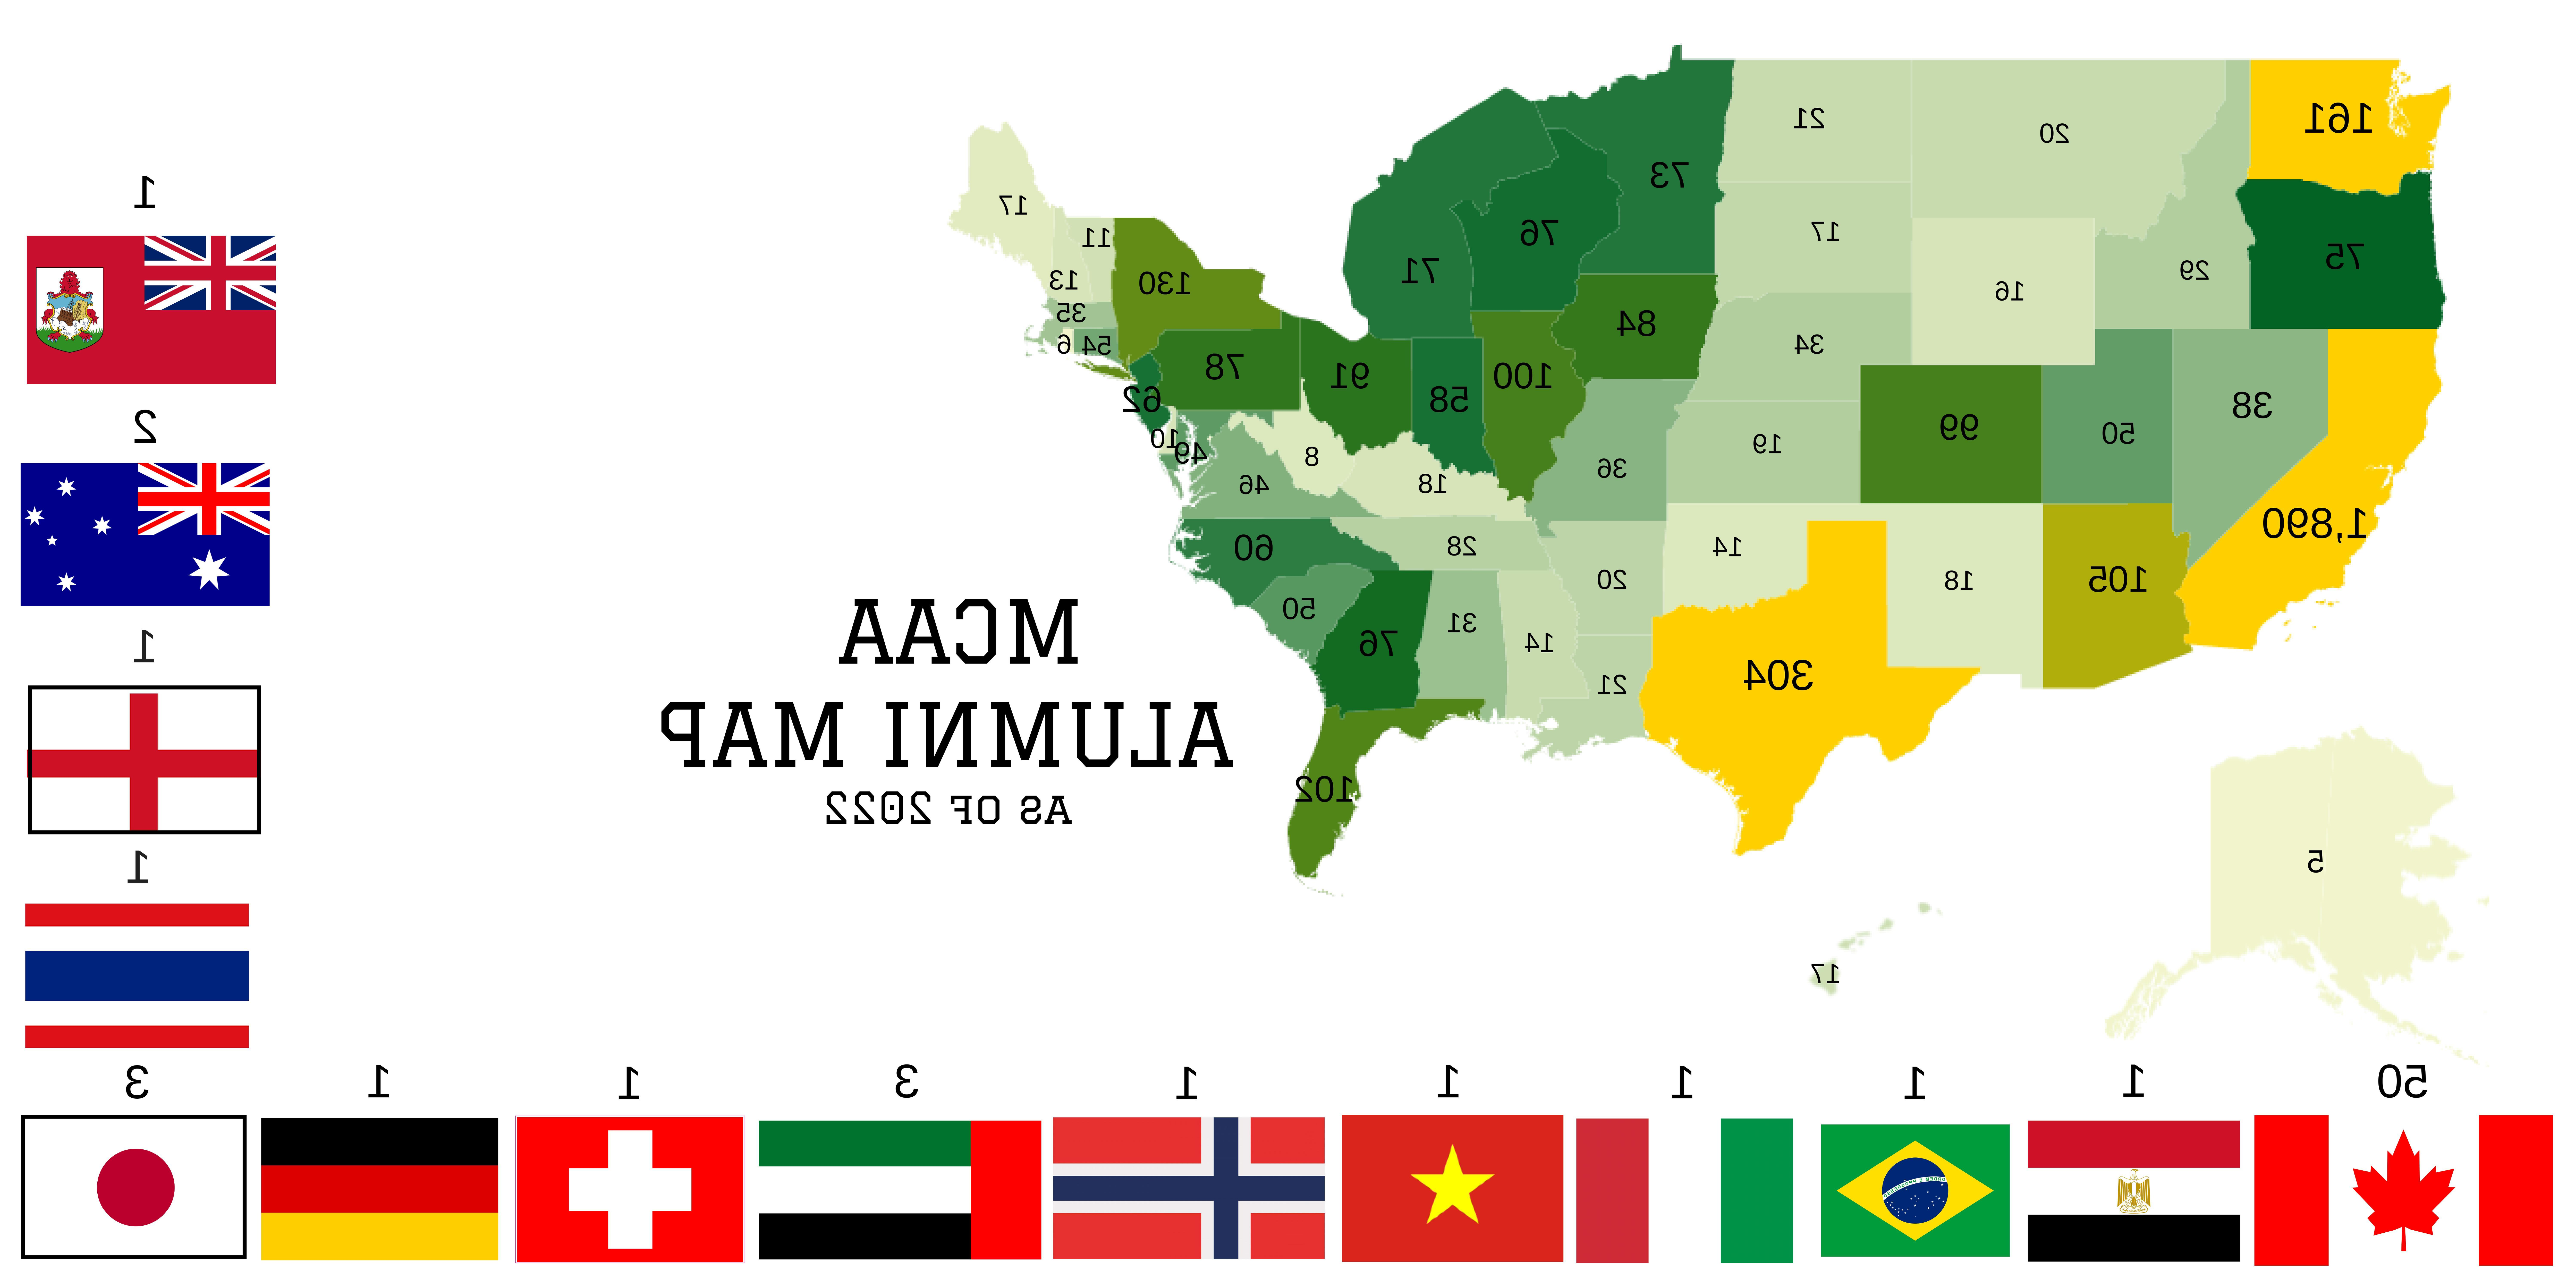 MCAA Alumni Map